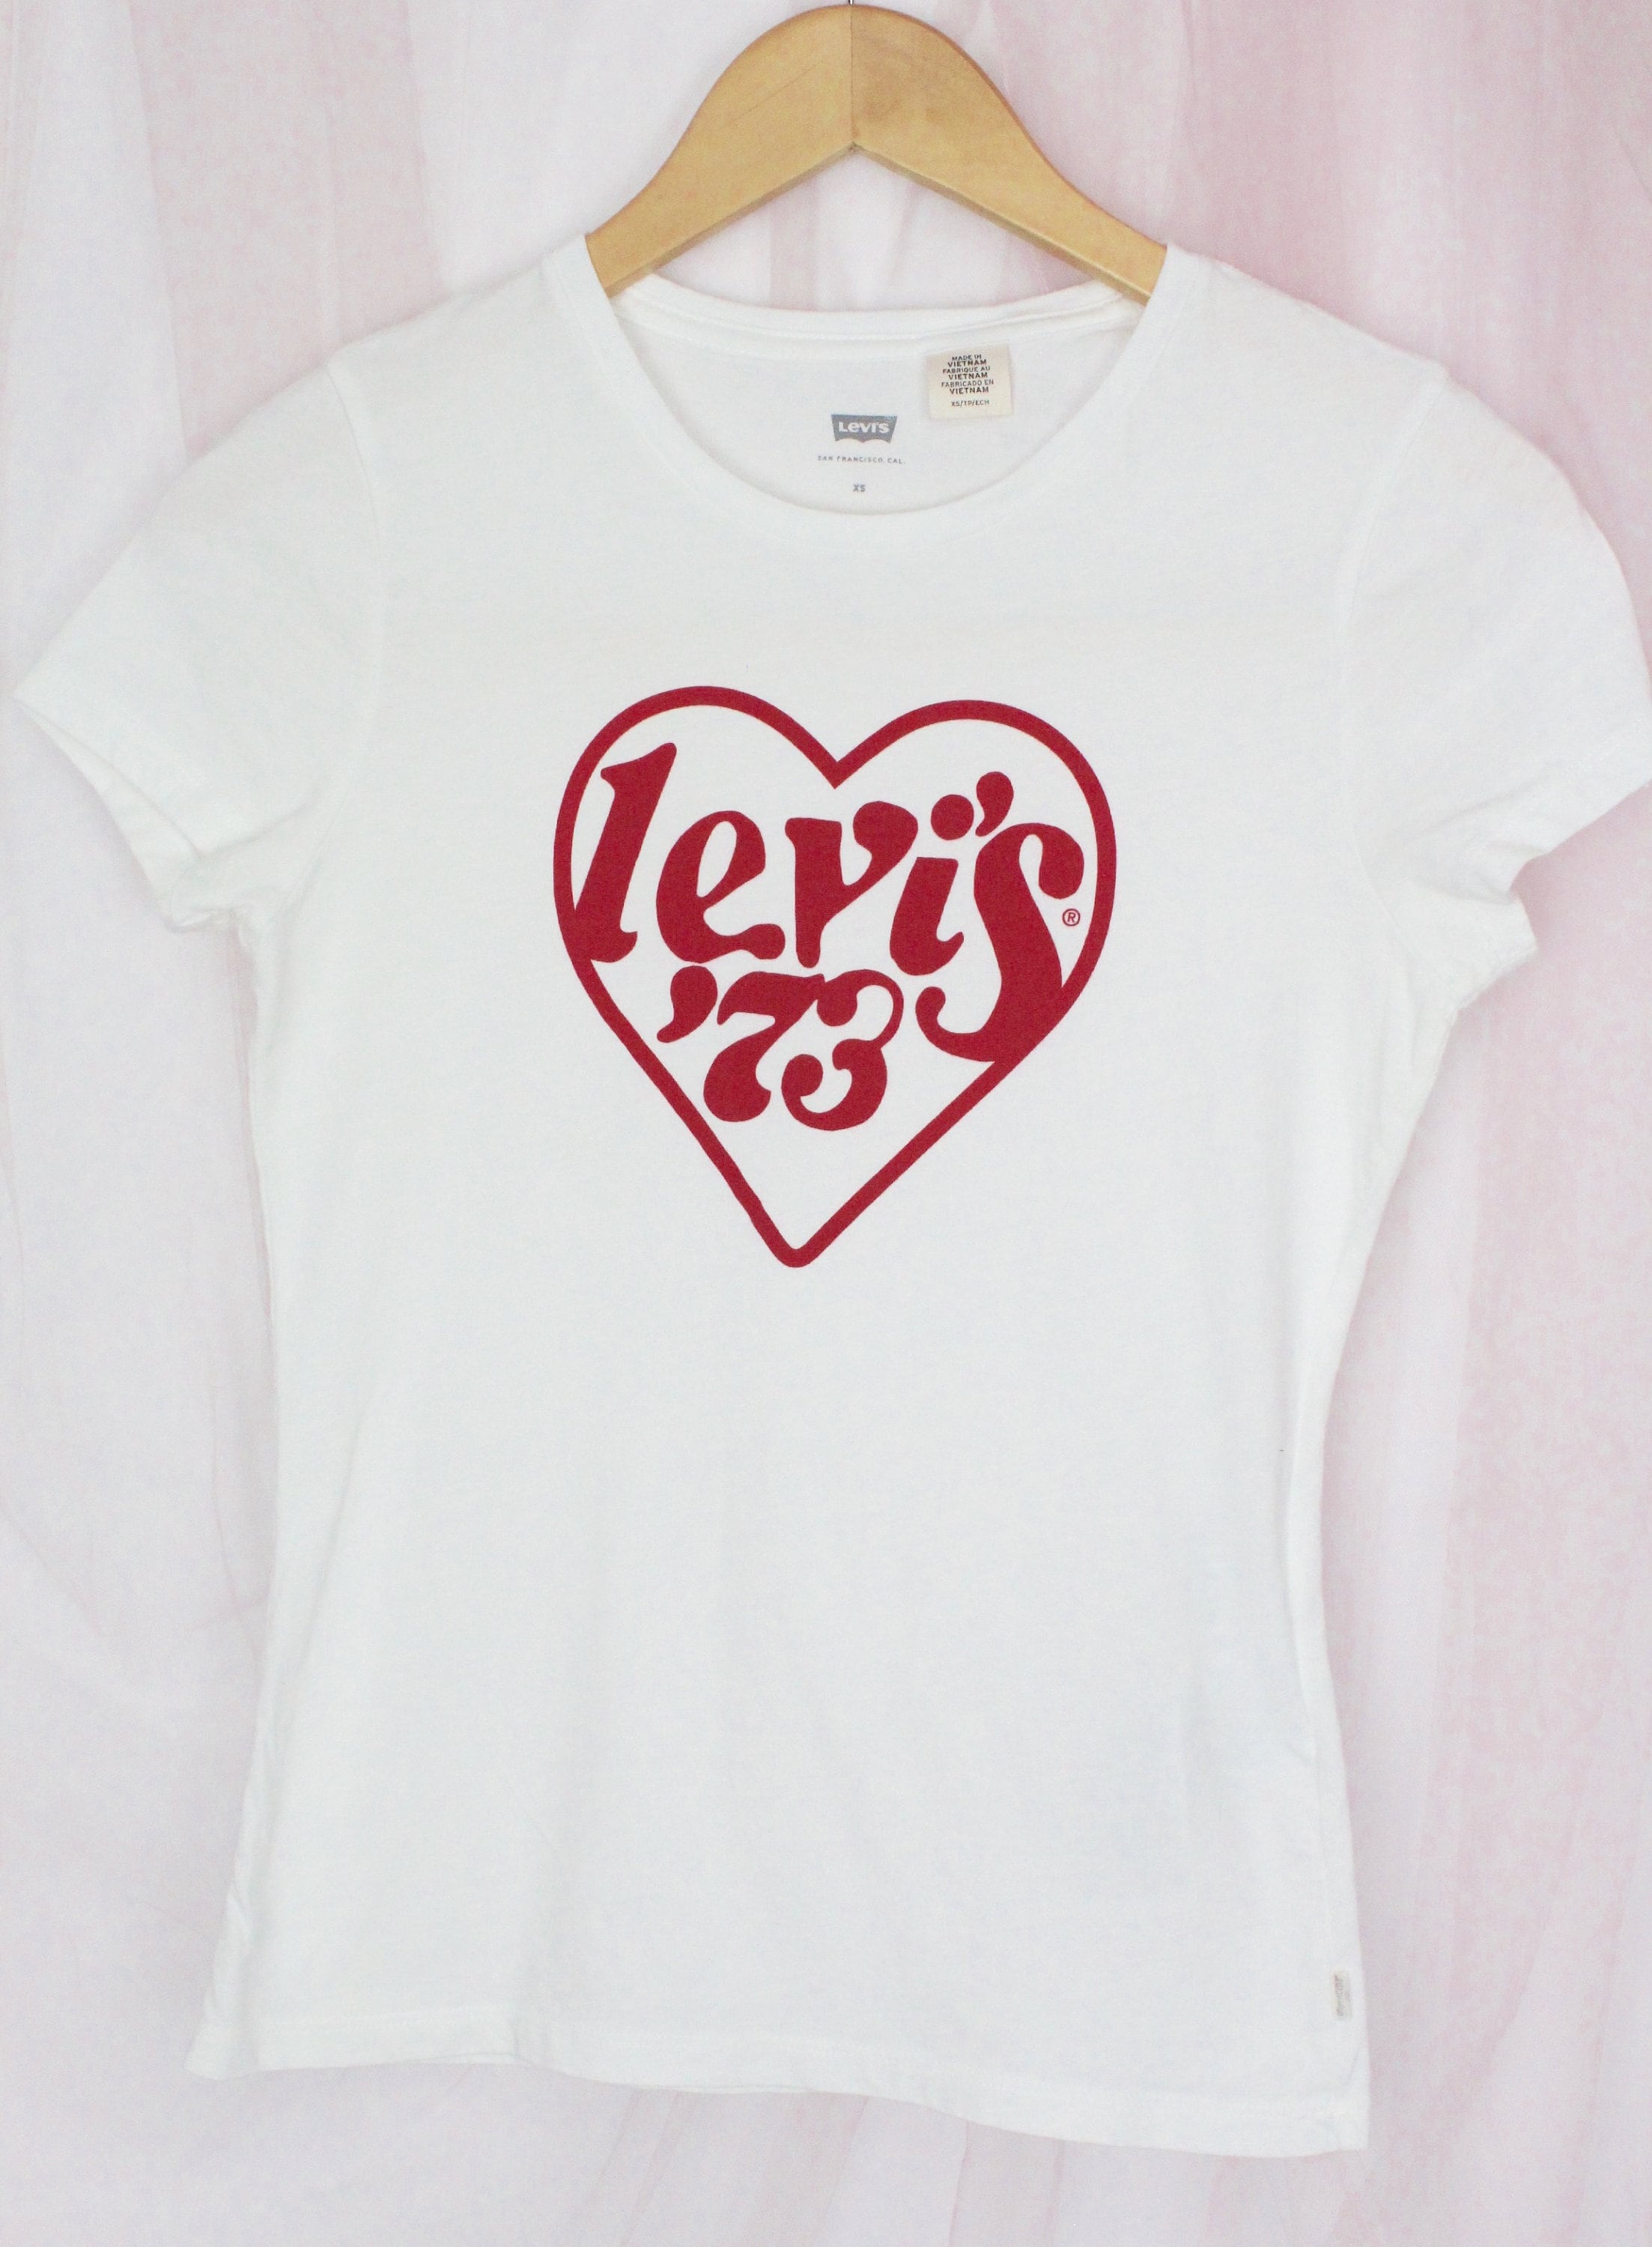 Levi's 73 Women's T-shirt - Etsy New Zealand